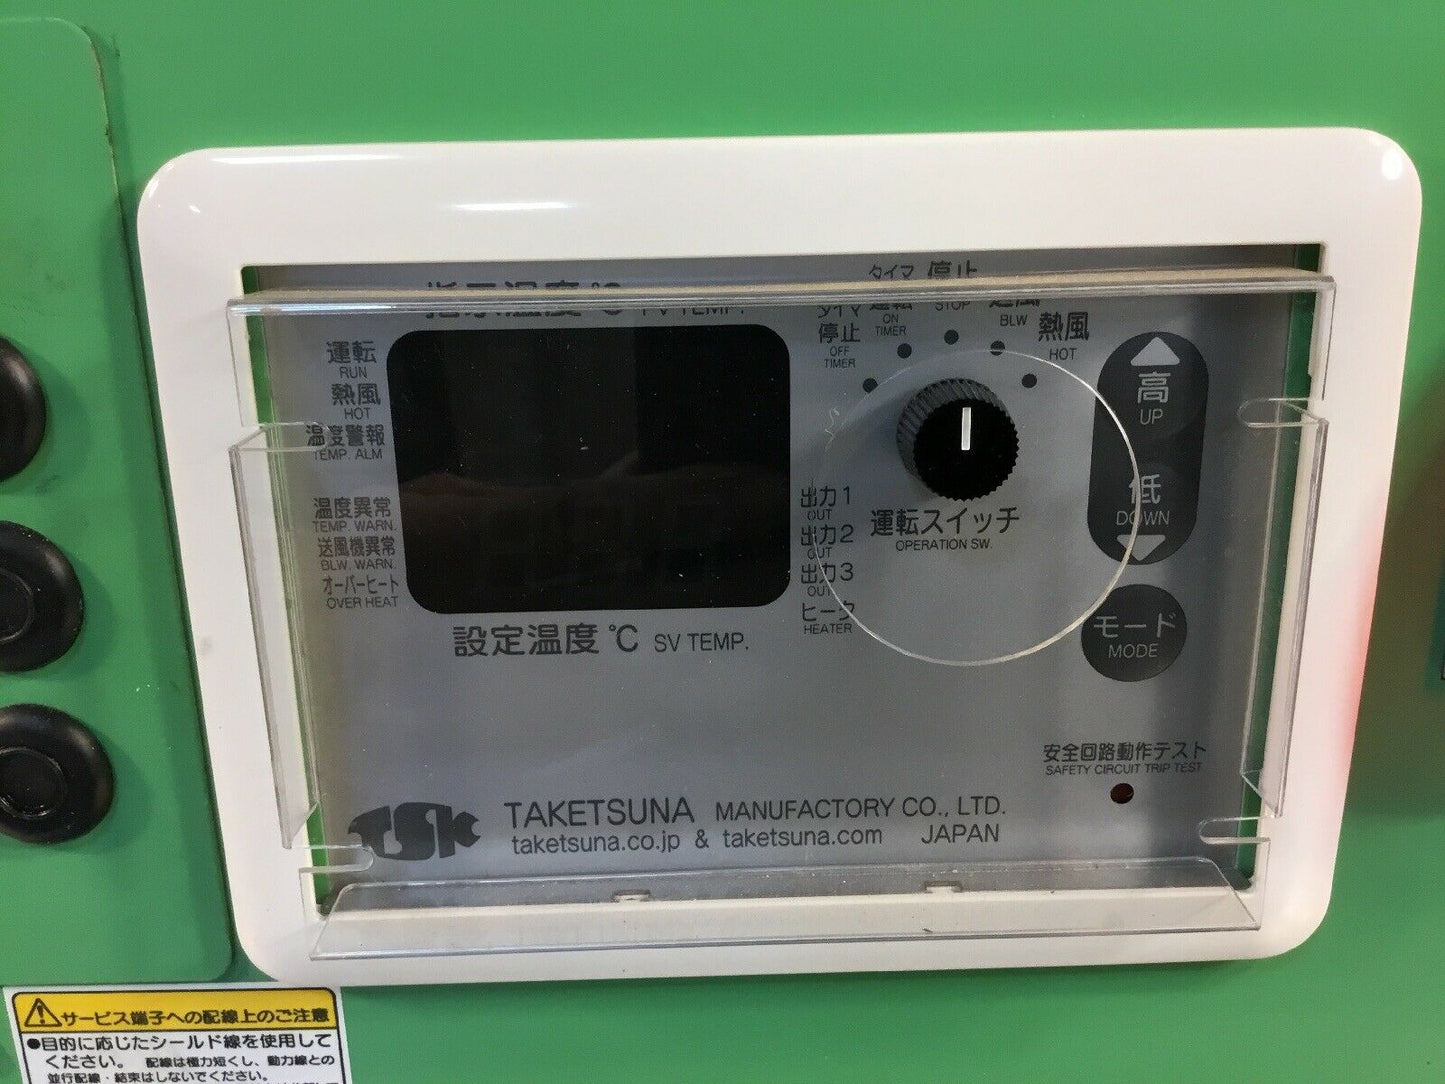 Taketsuna Model TSK-22 Type 3200-3C-013YA-LB Hot Air Generator 3KW 200V   Wall